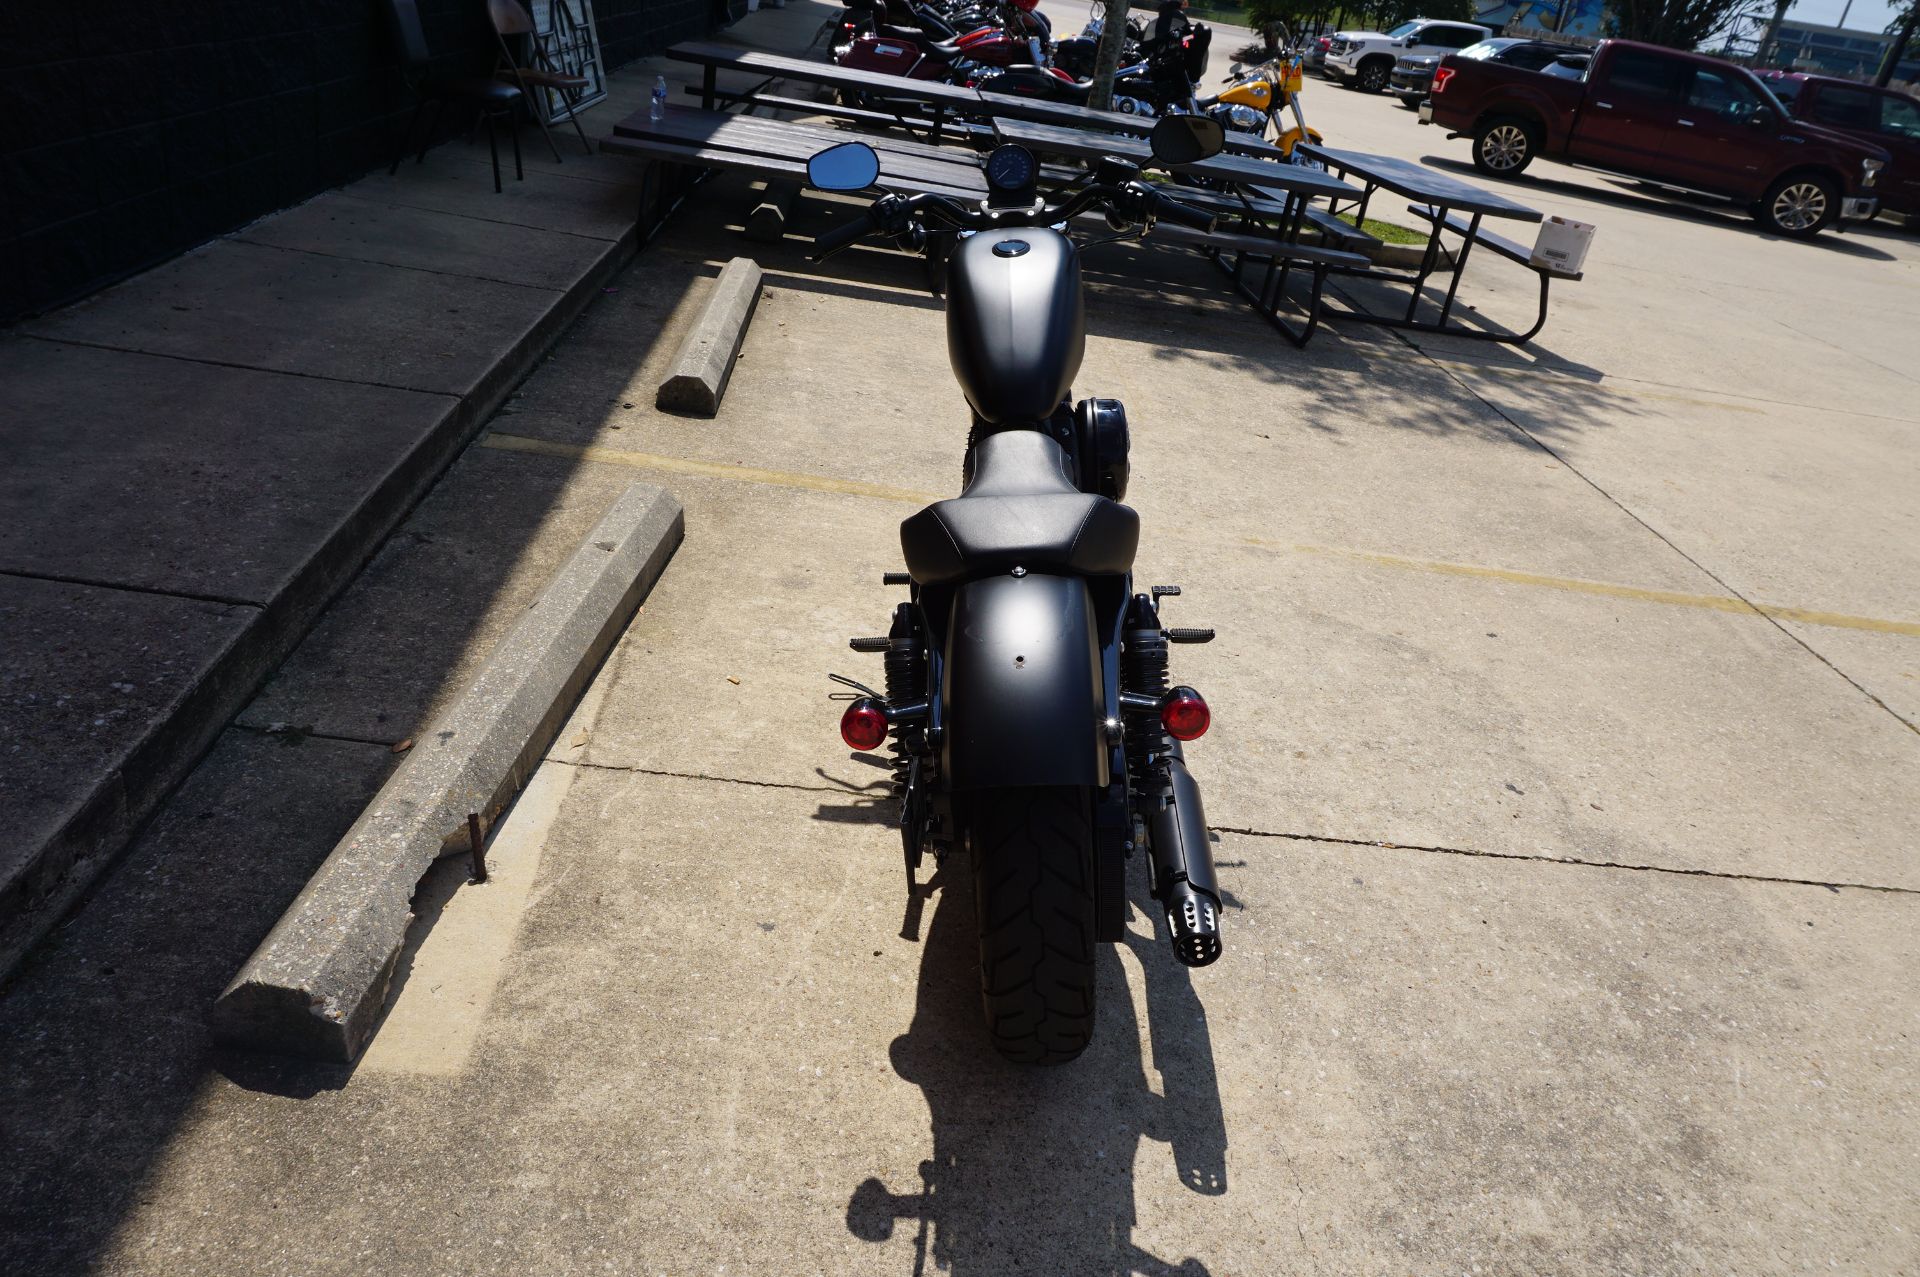 2021 Harley-Davidson Iron 883™ in Metairie, Louisiana - Photo 8